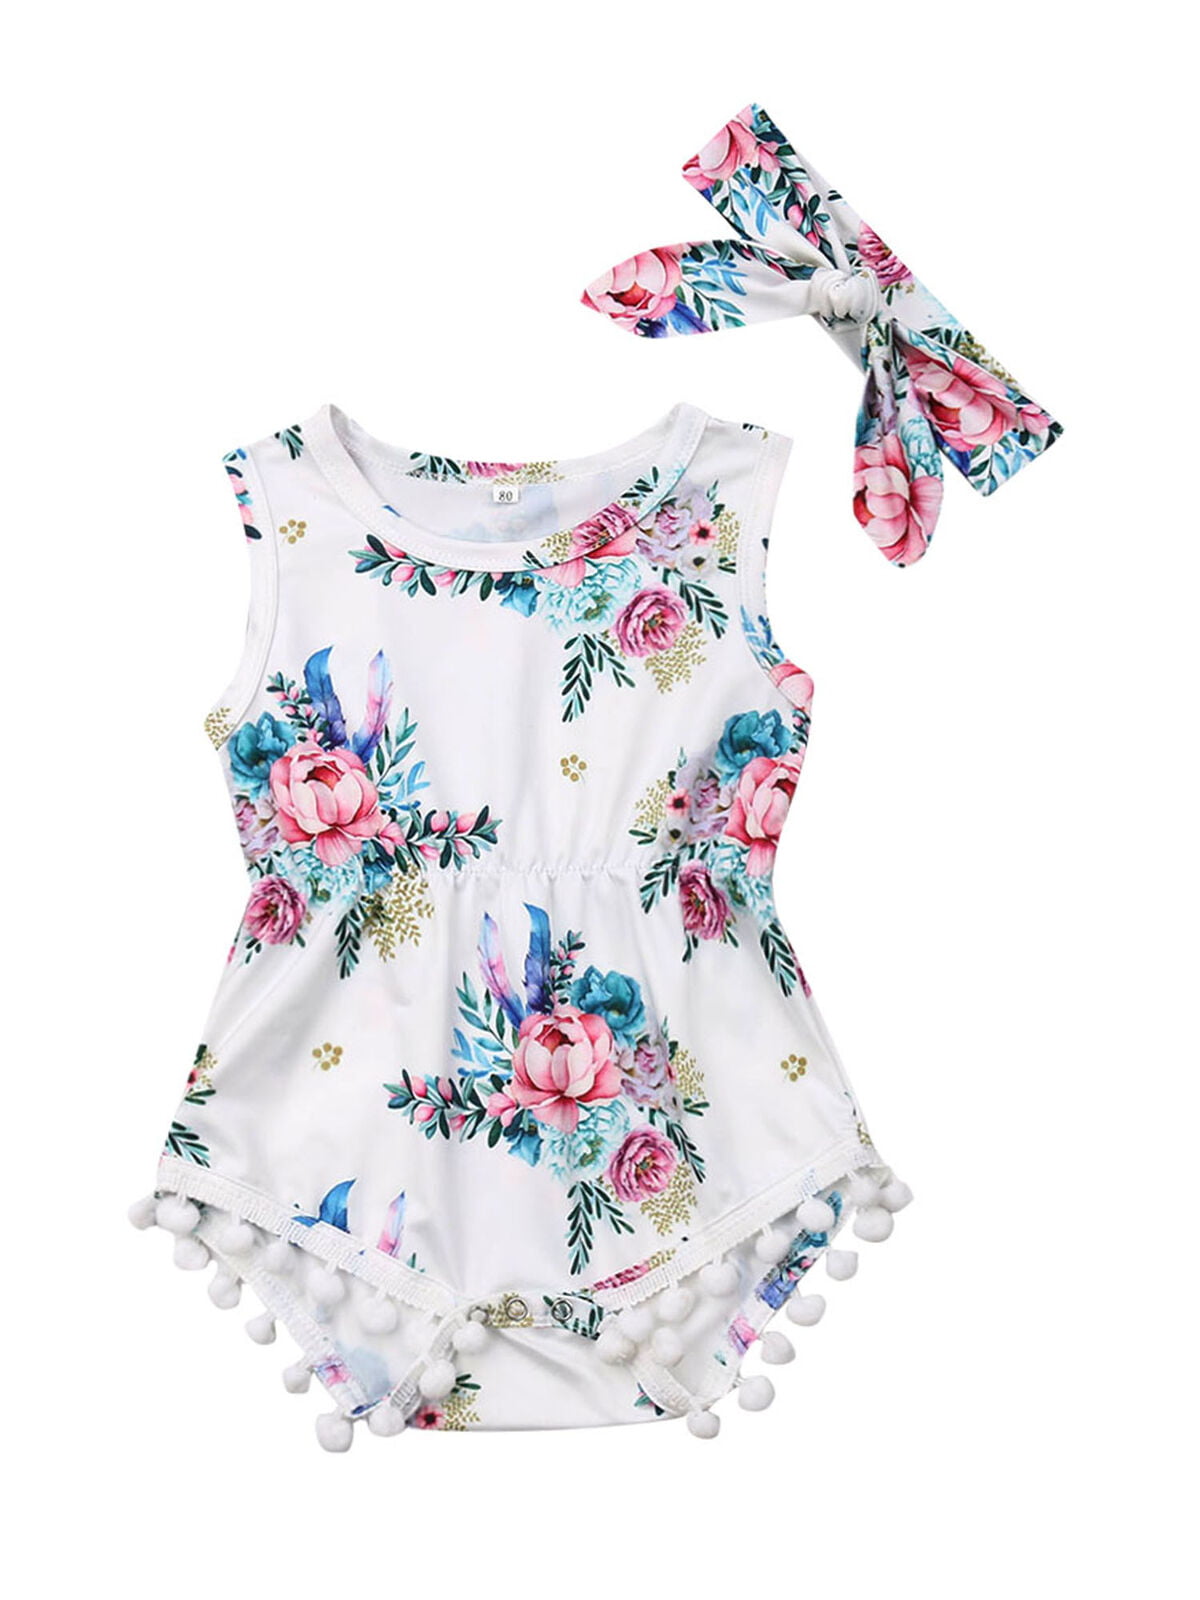 Baby Girls Newborn Clothes Cotton Romper Bodysuit Jumpsuit Summer Outfits Set